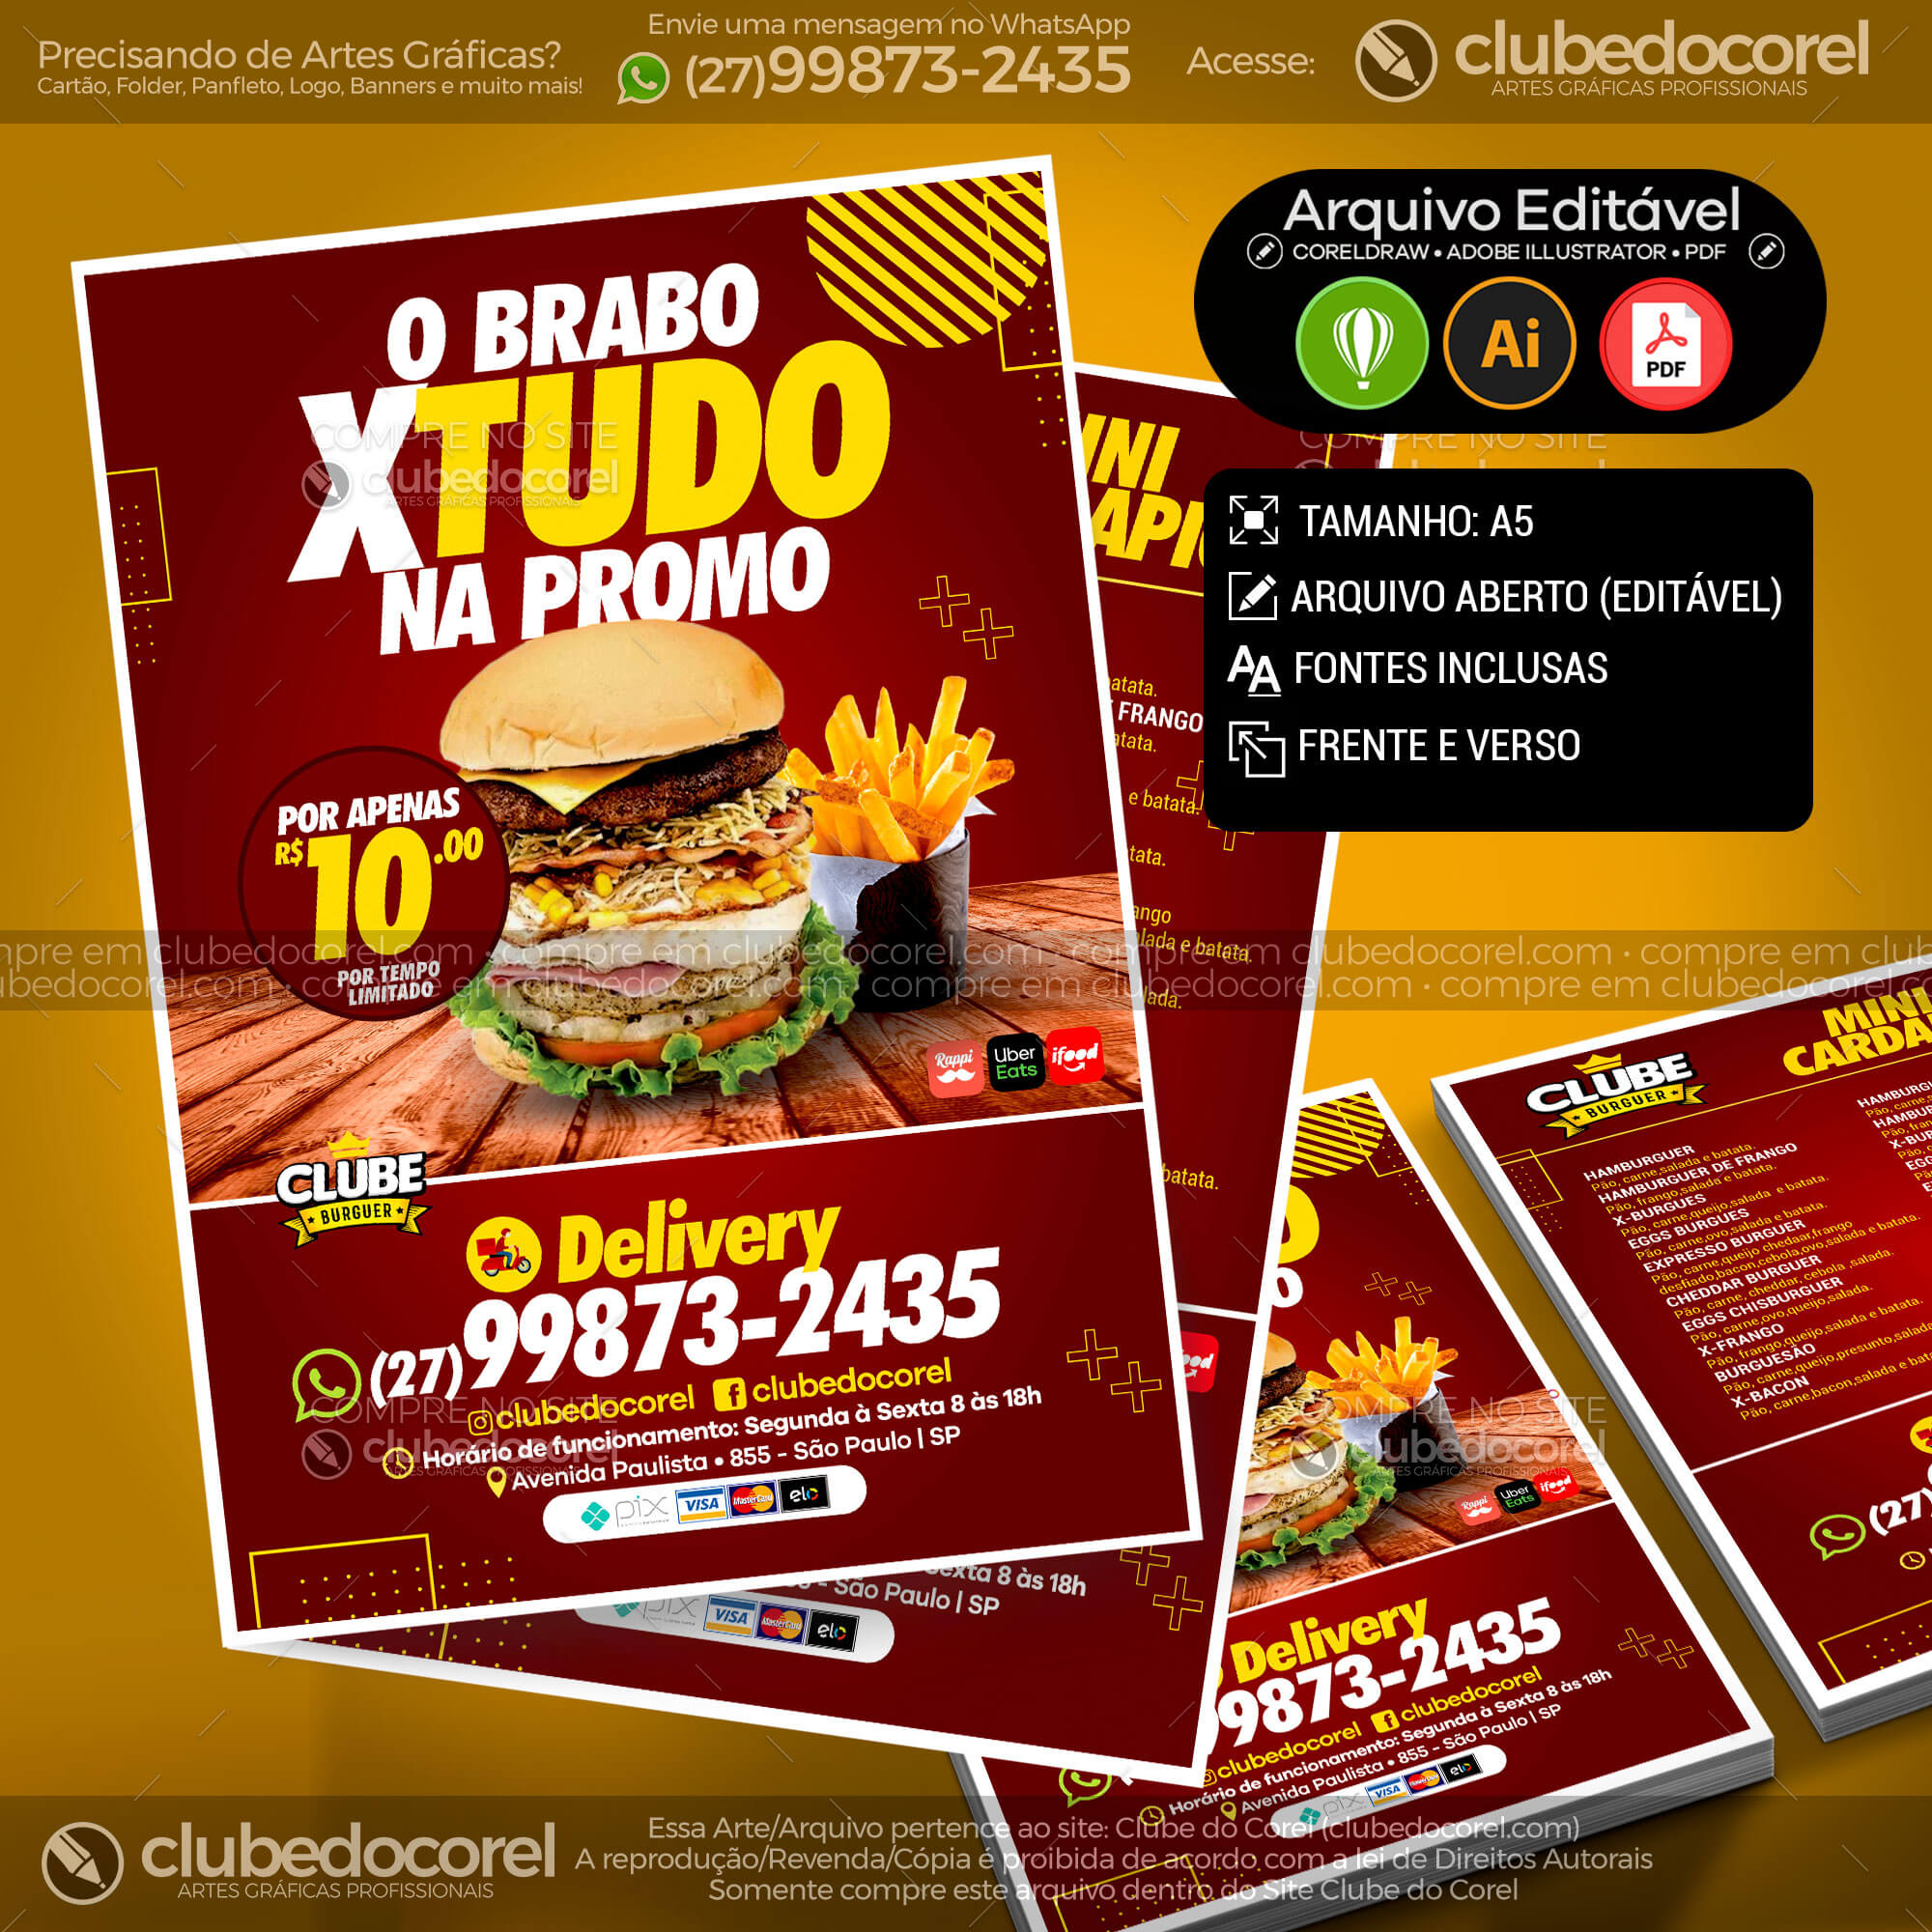 Panfleto Flyer X Tudo Promocao CDR AI PDF 02 Clube do Corel 02